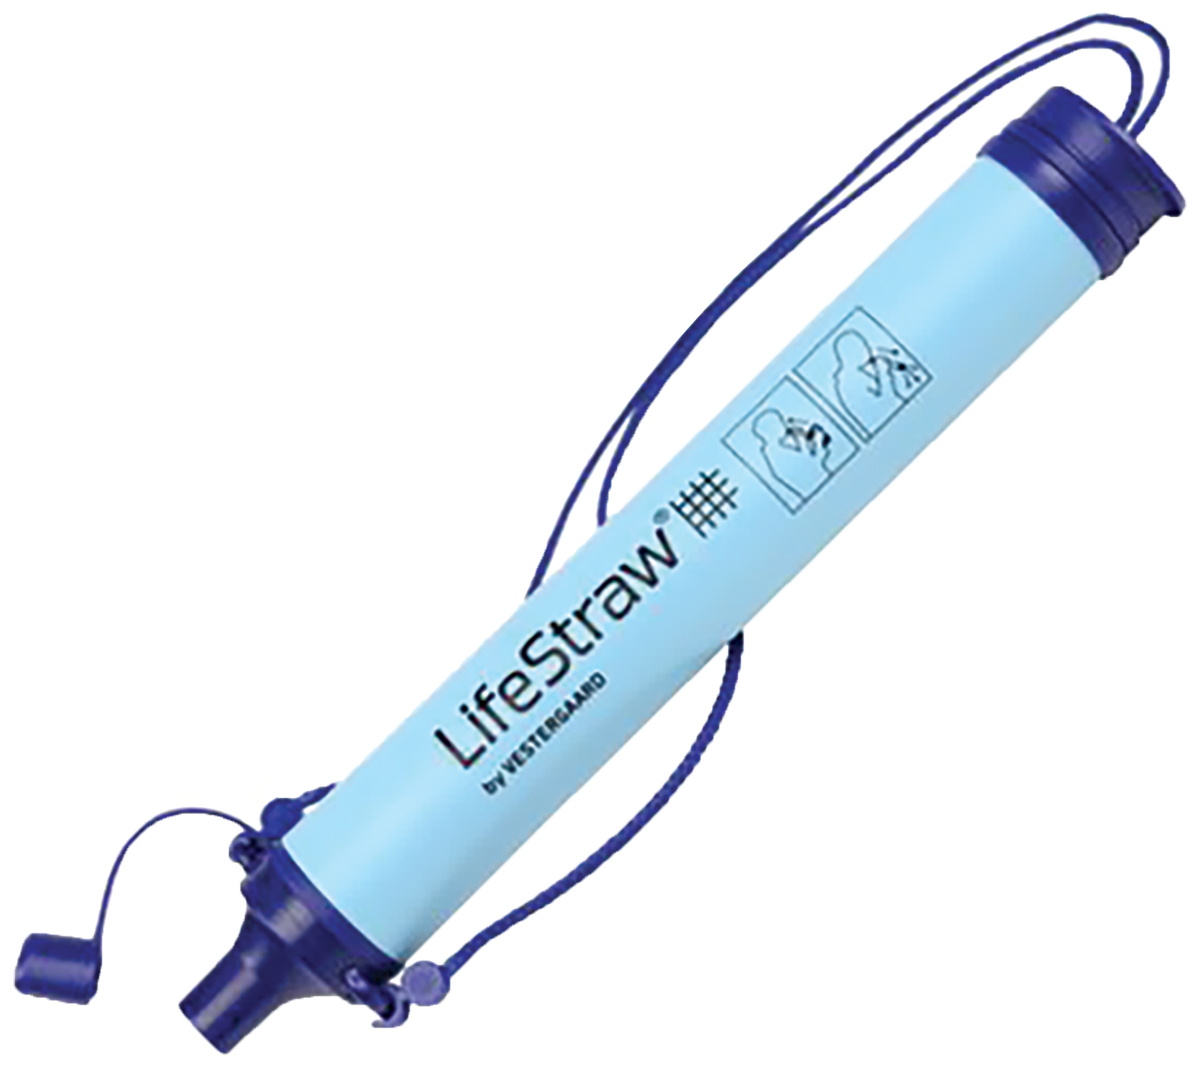 Lifestraw Water Purifier